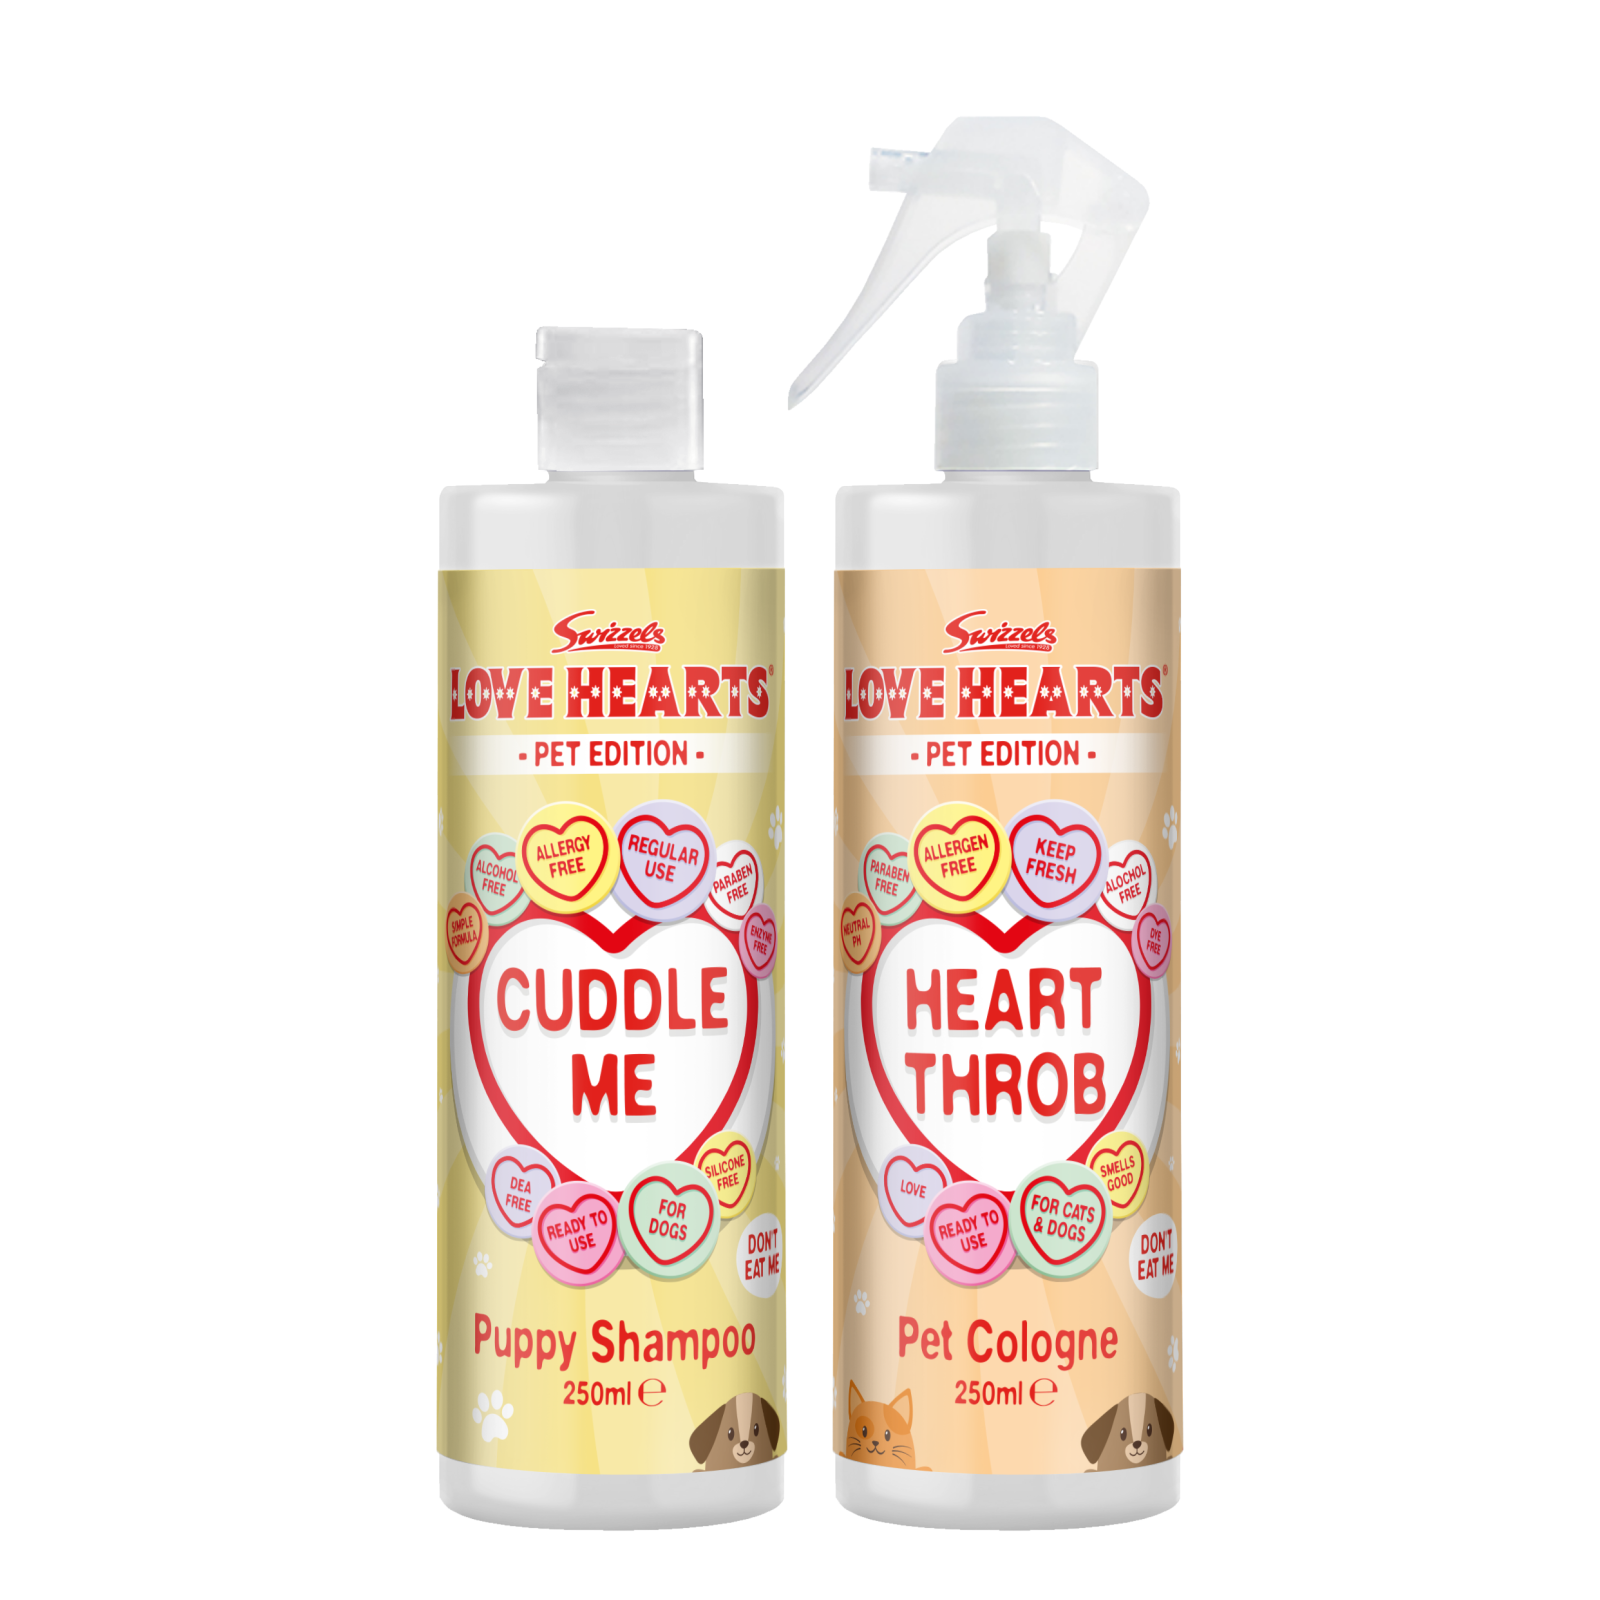 Swizzels Love Hearts - Puppy Shampoo & Pet Cologne - 2 x 250ml